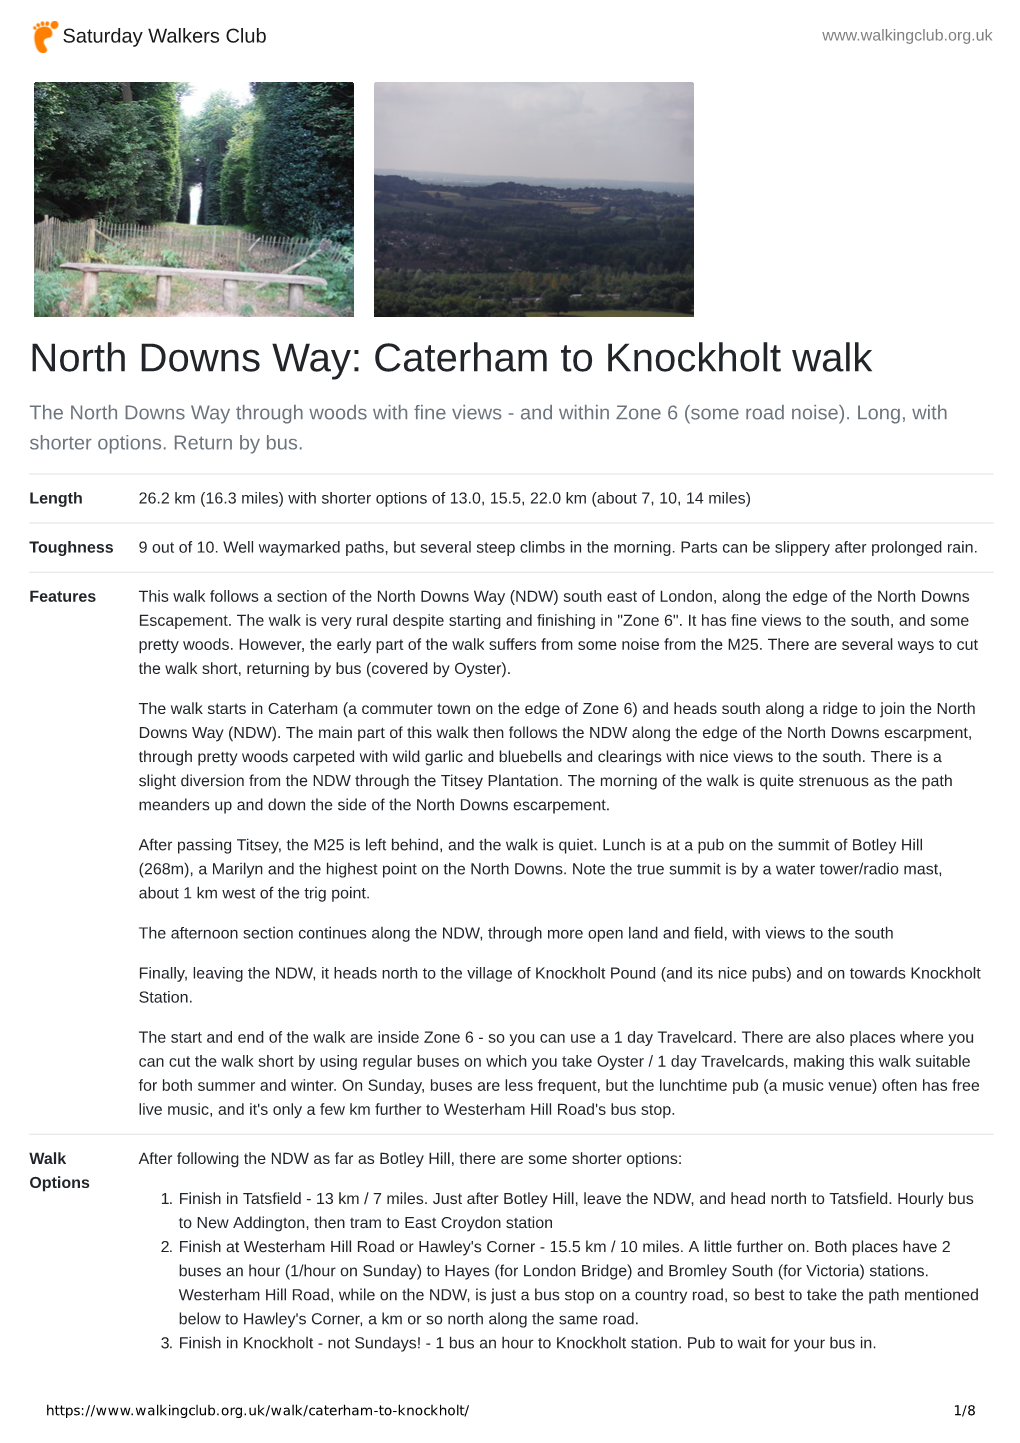 North Downs Way: Caterham to Knockholt Walk